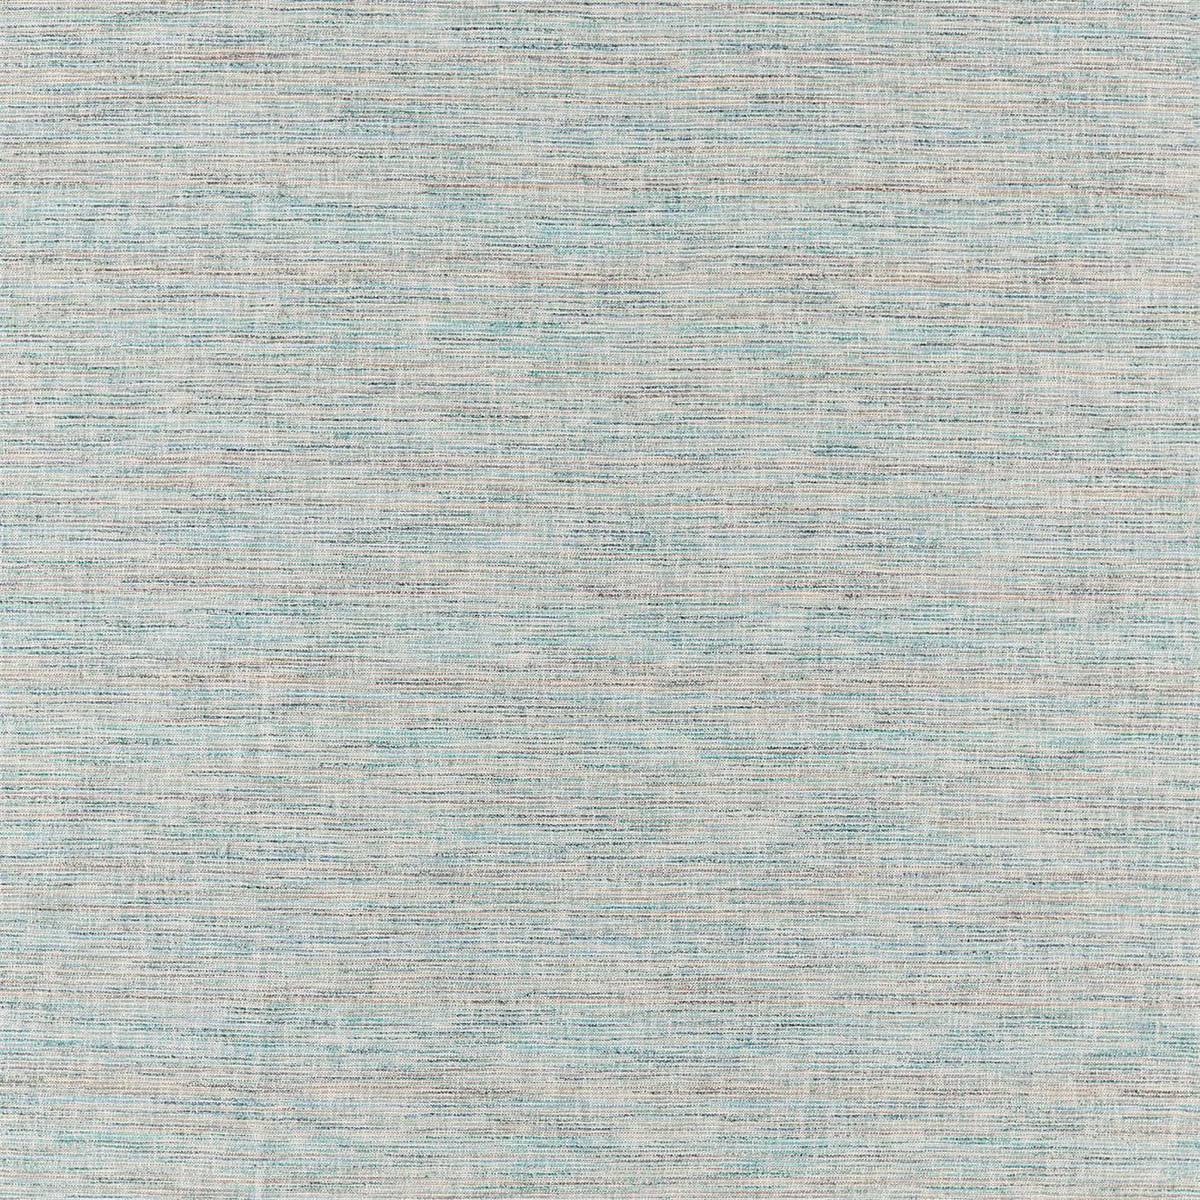 Lizella Denim/Russet Fabric by Harlequin